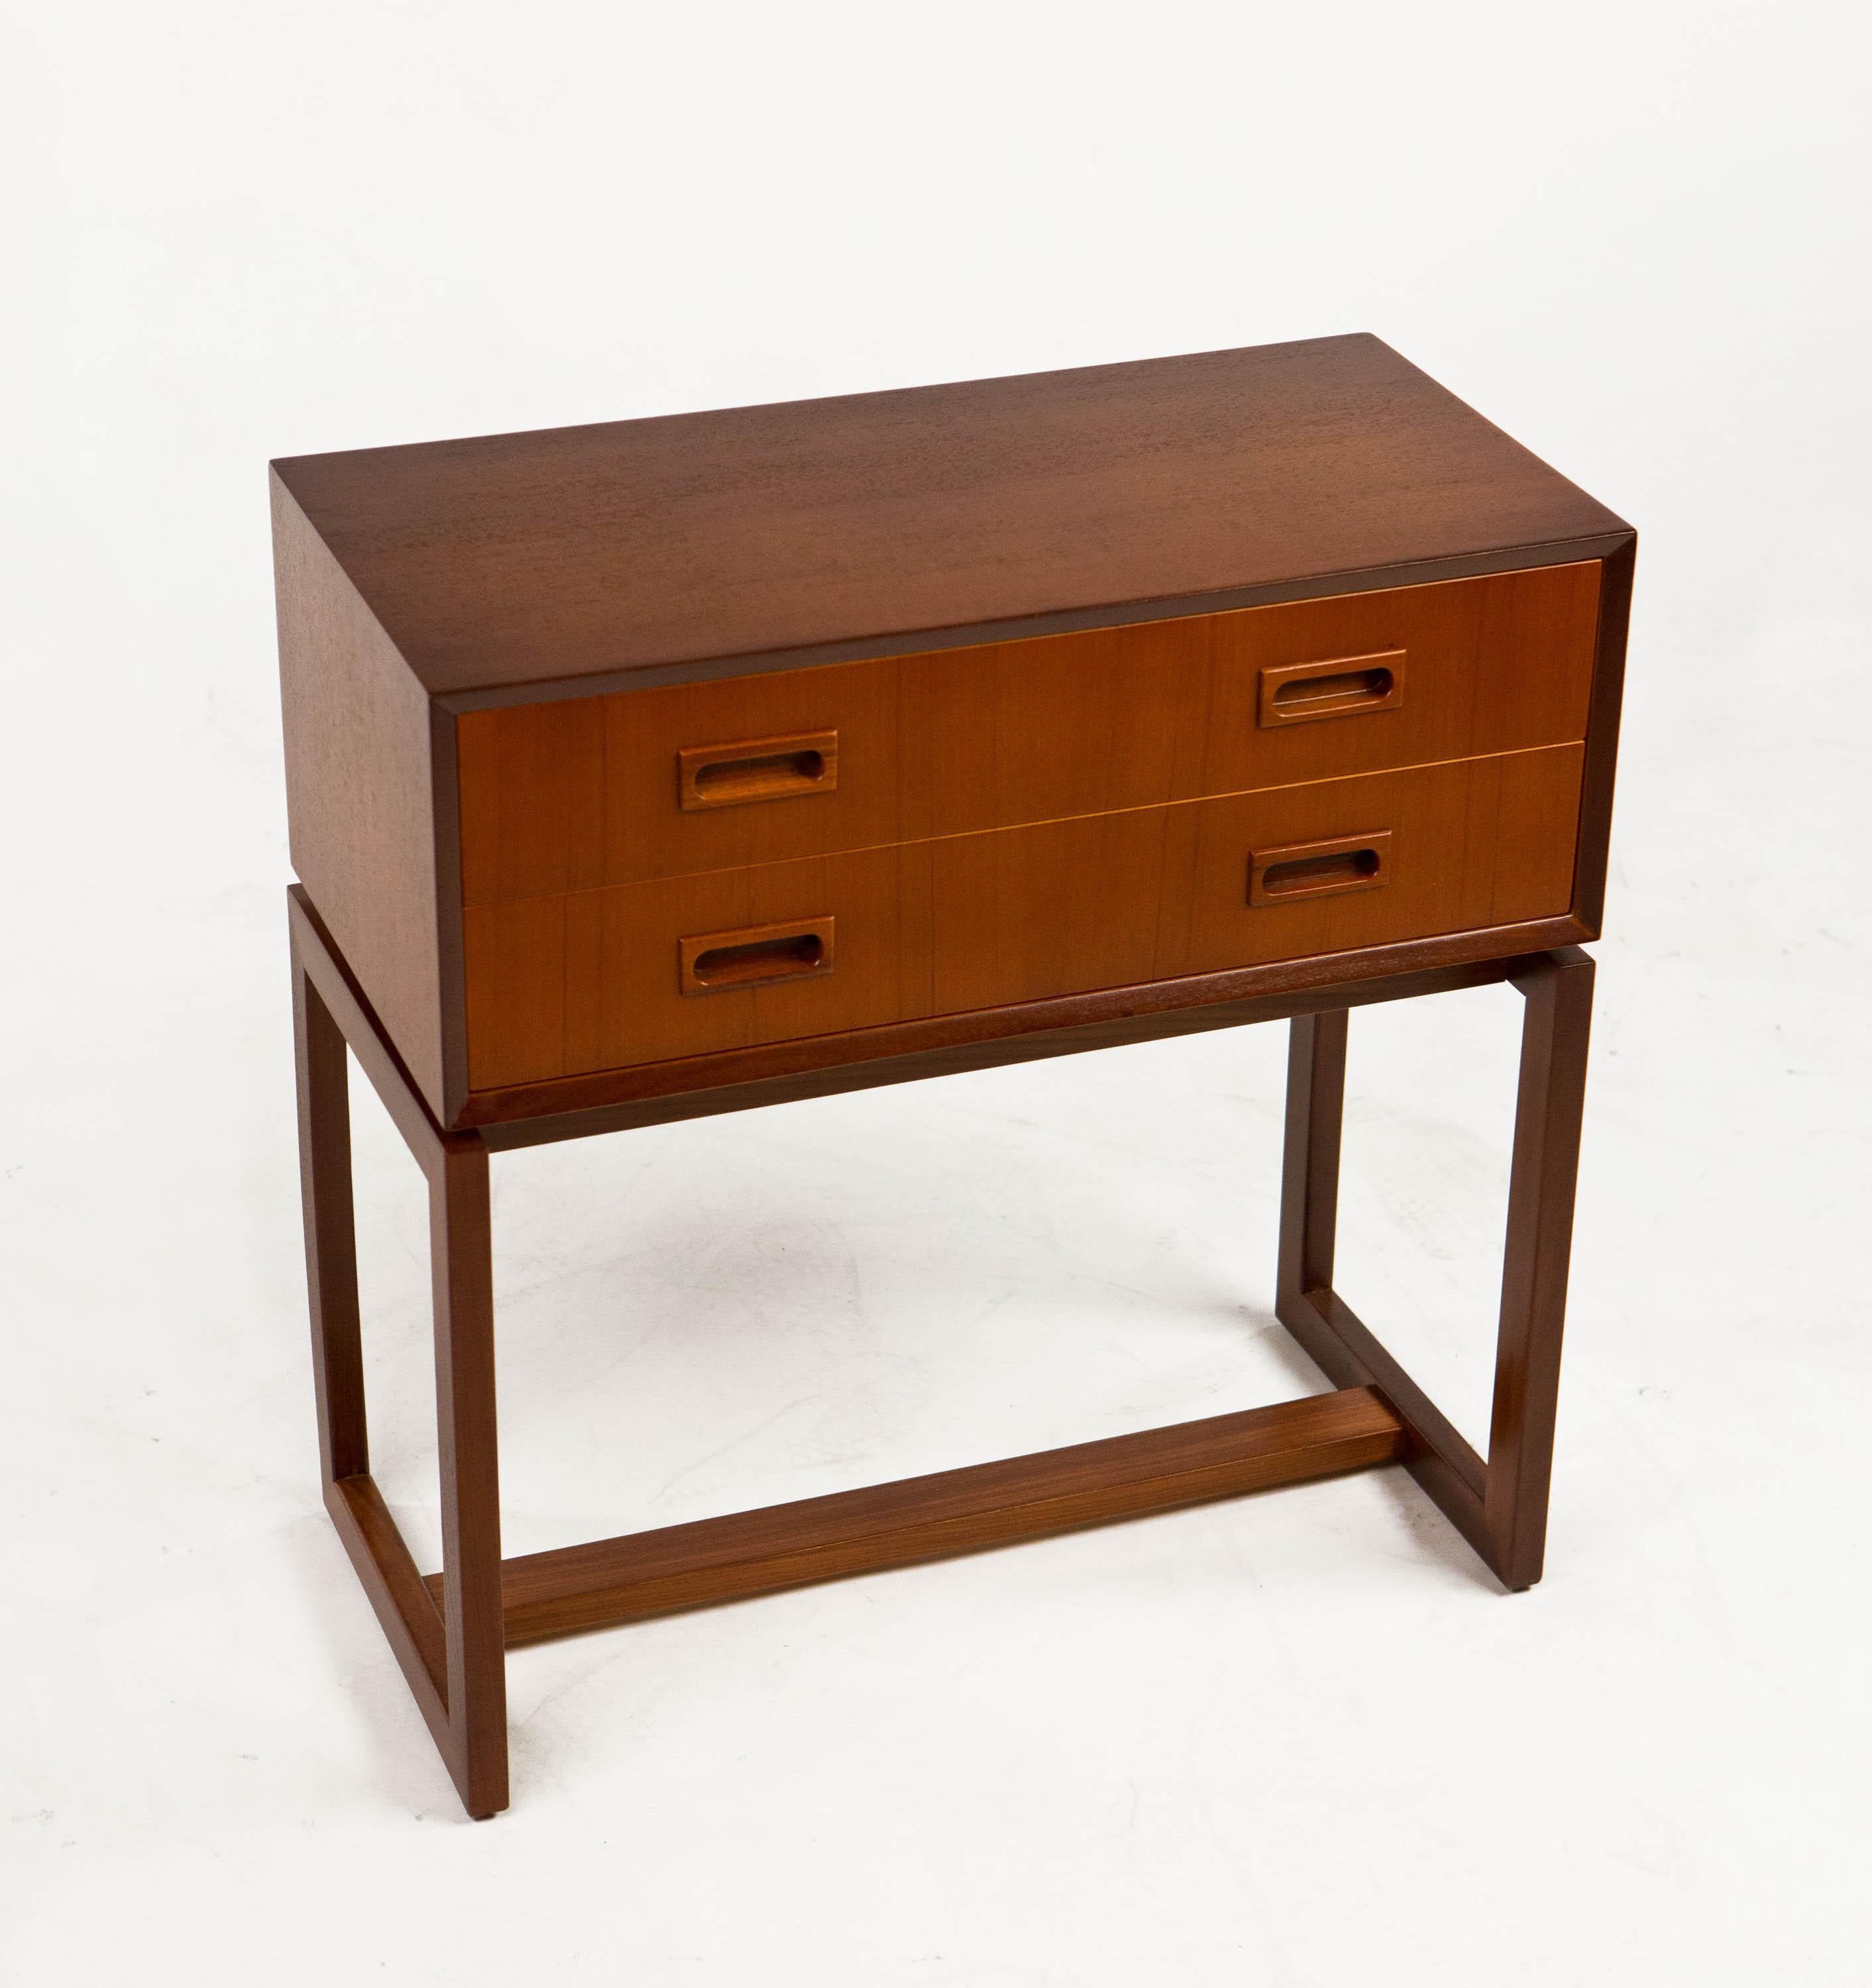 Teak Two Drawer Bureau with Beveled Edge, Danish Design 1950's For Sale 10